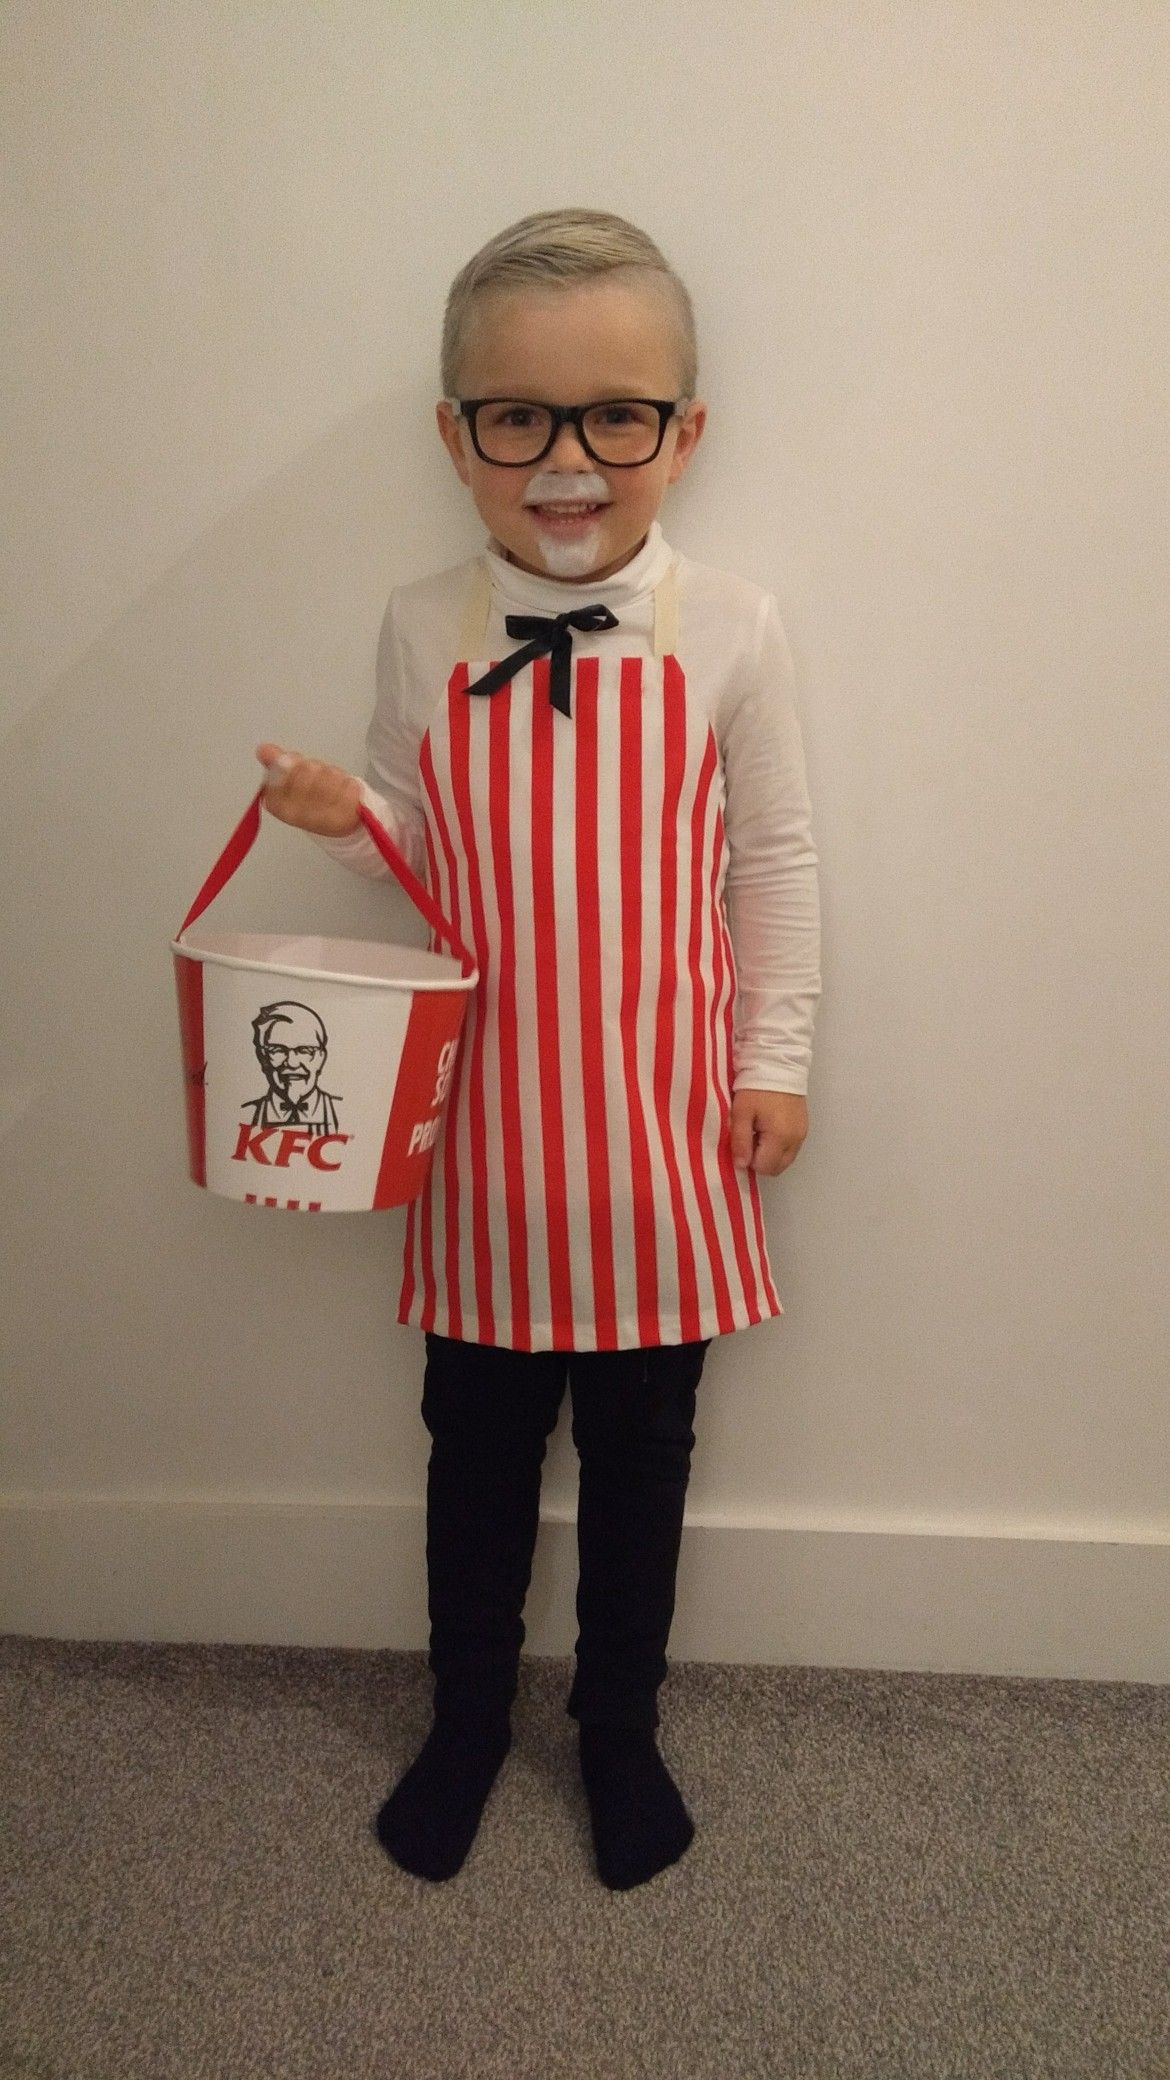 Kids Dress Up Ideas
 KFC Colonel Saunders kids fancy dress costume for